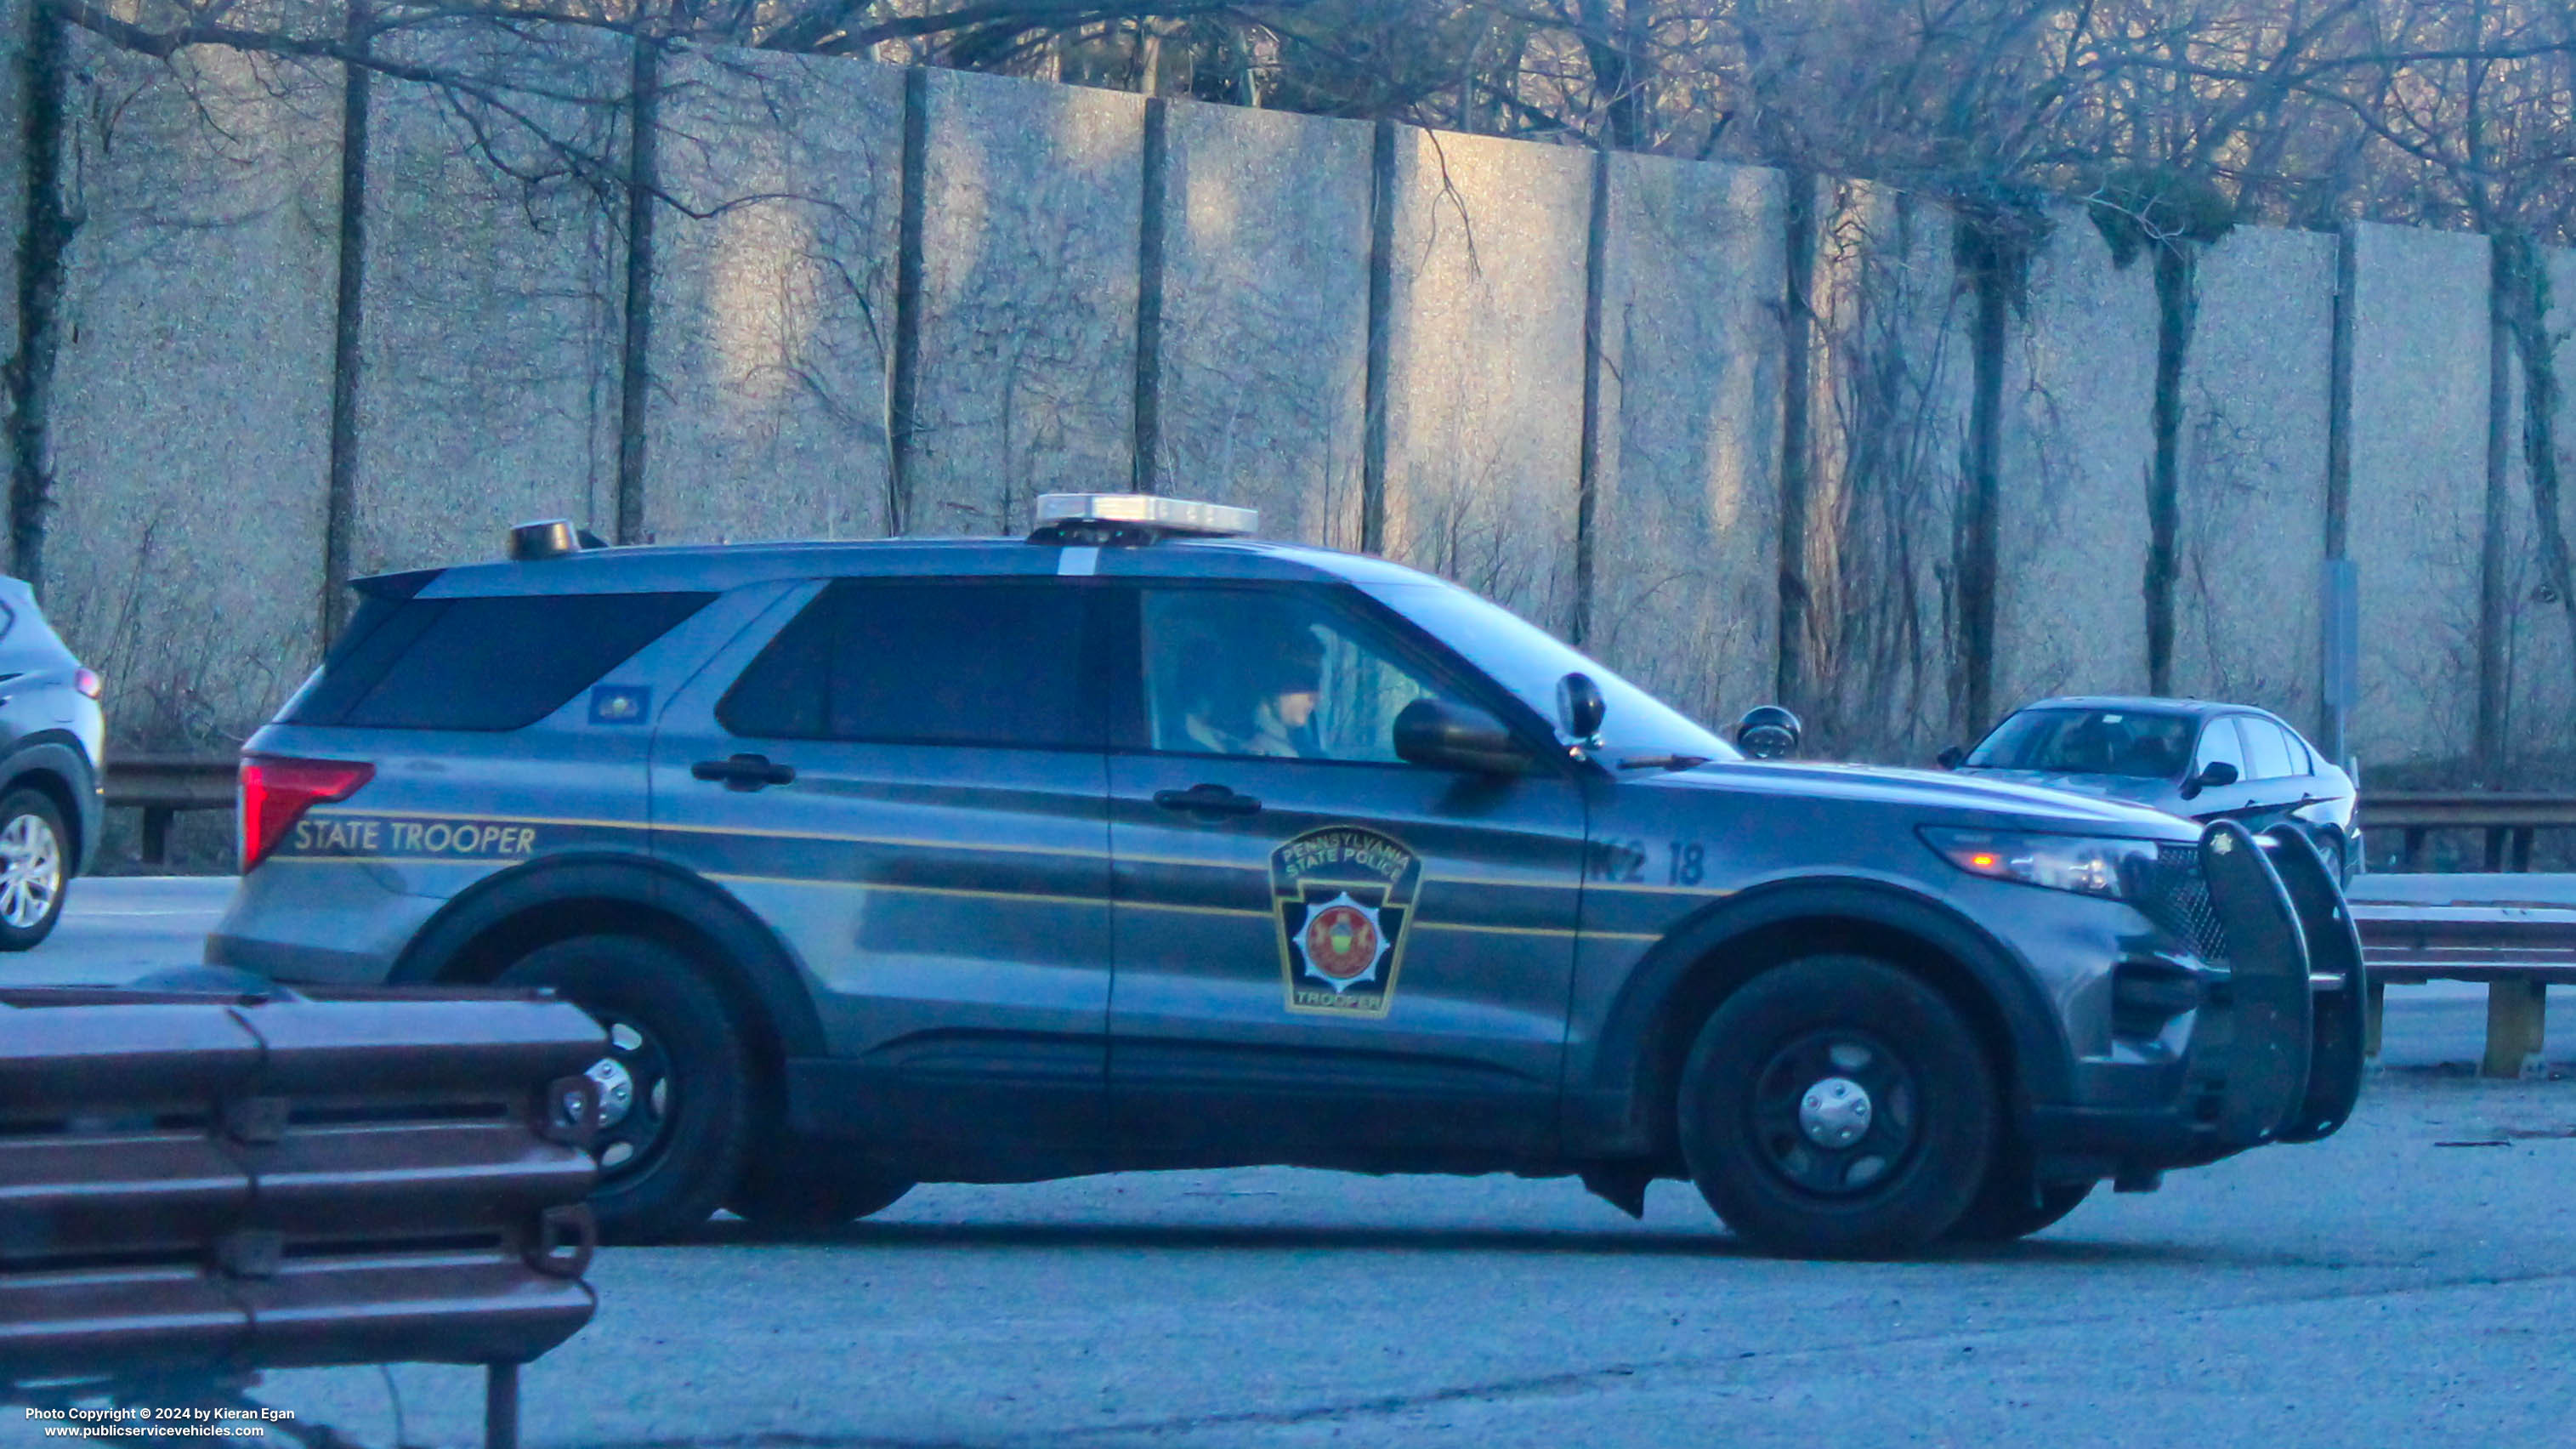 A photo  of Pennsylvania State Police
            Cruiser K2 18, a 2020-2021 Ford Police Interceptor Utility             taken by Kieran Egan